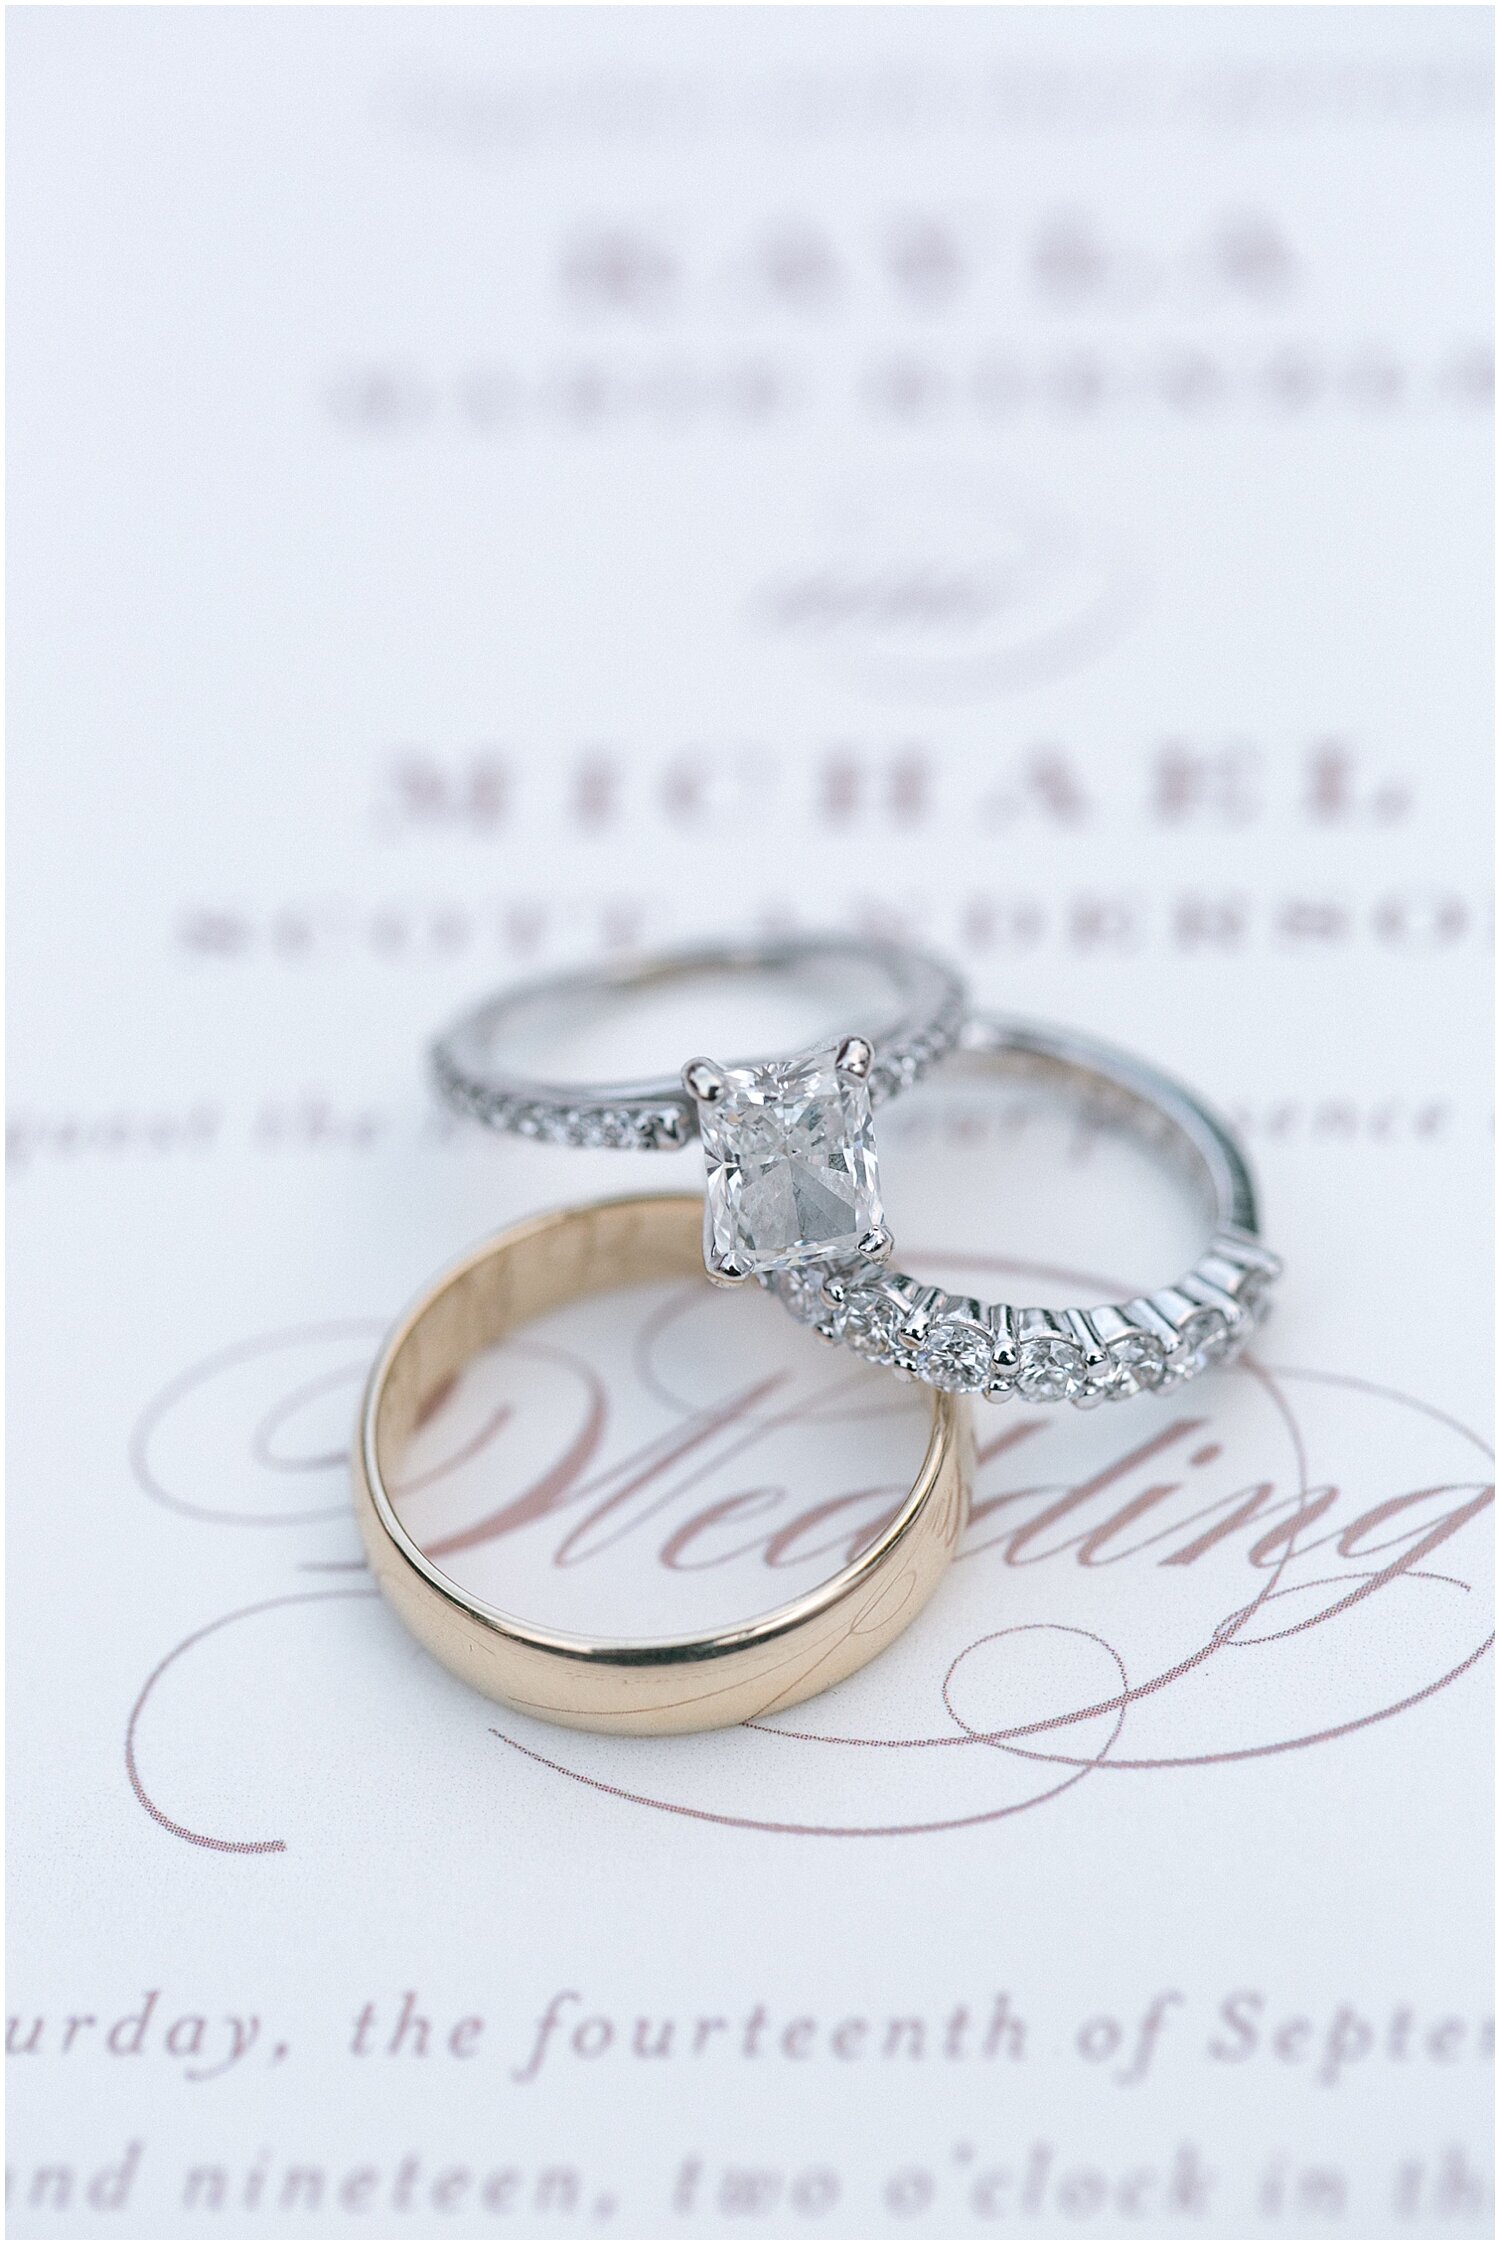  wedding rings and wedding invitation 